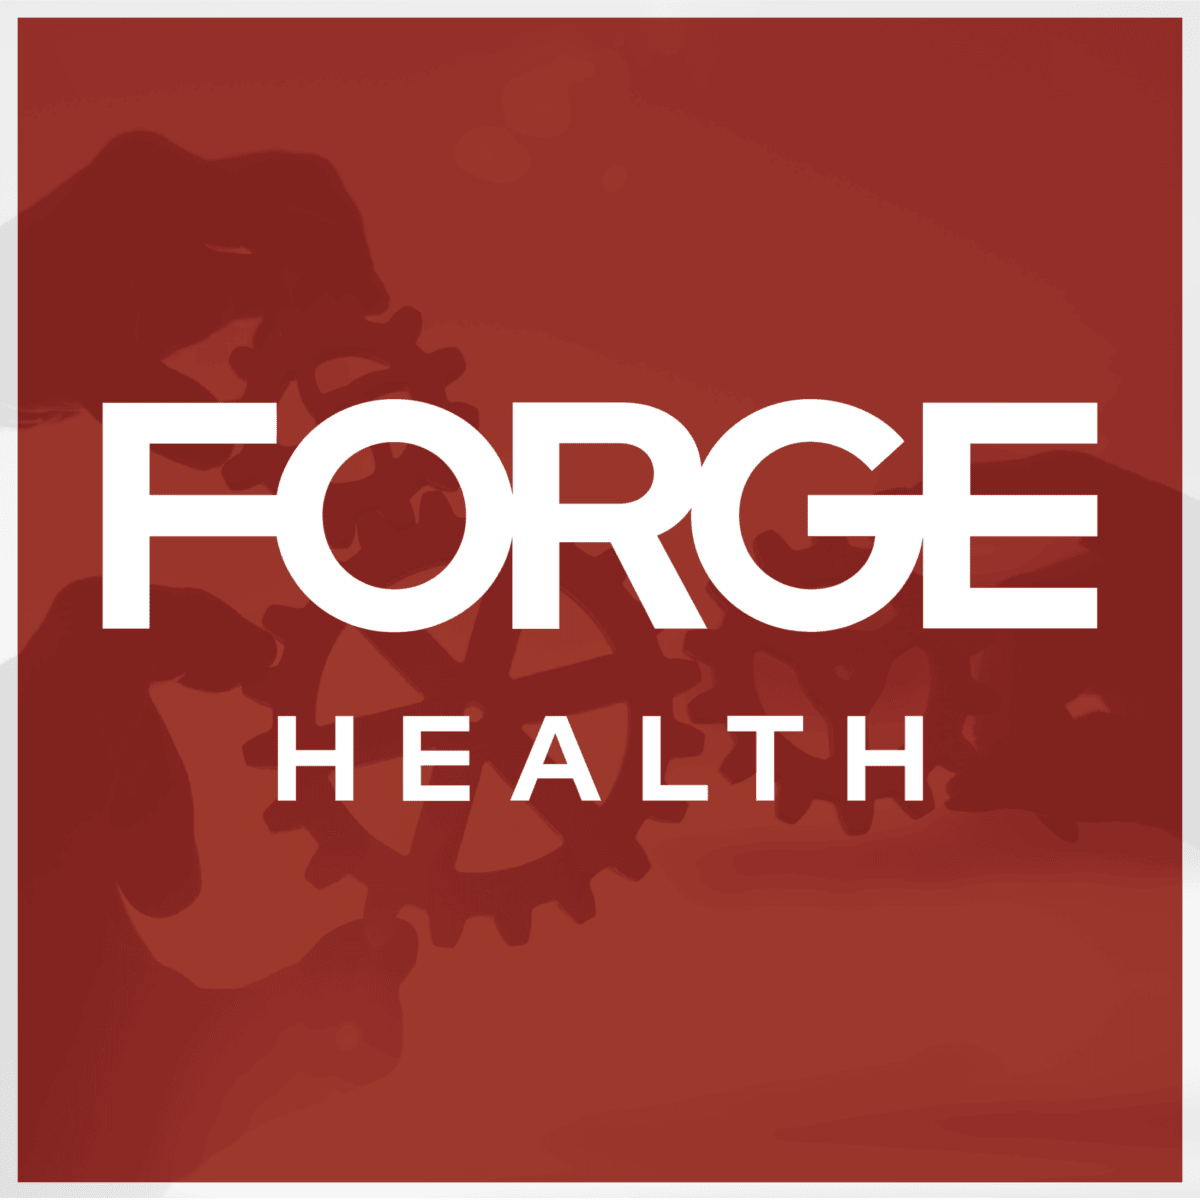 Forge Health